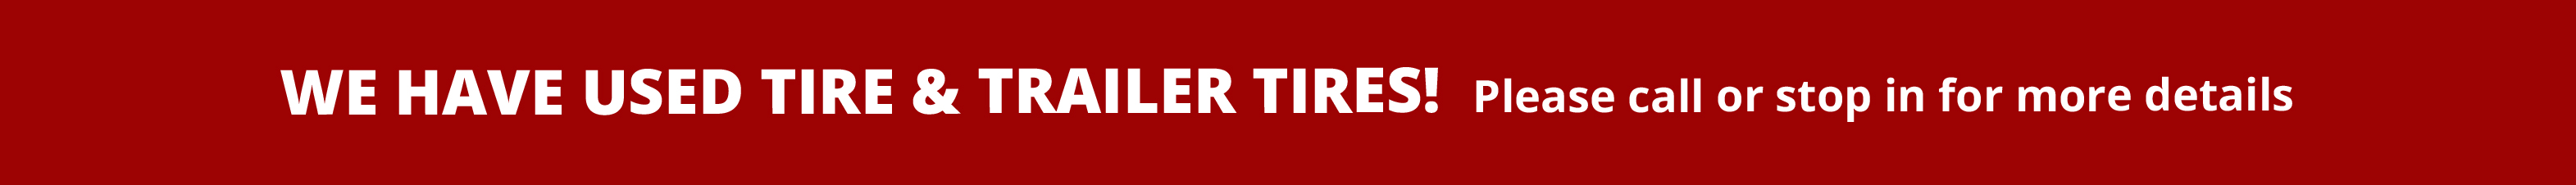 Tire banner